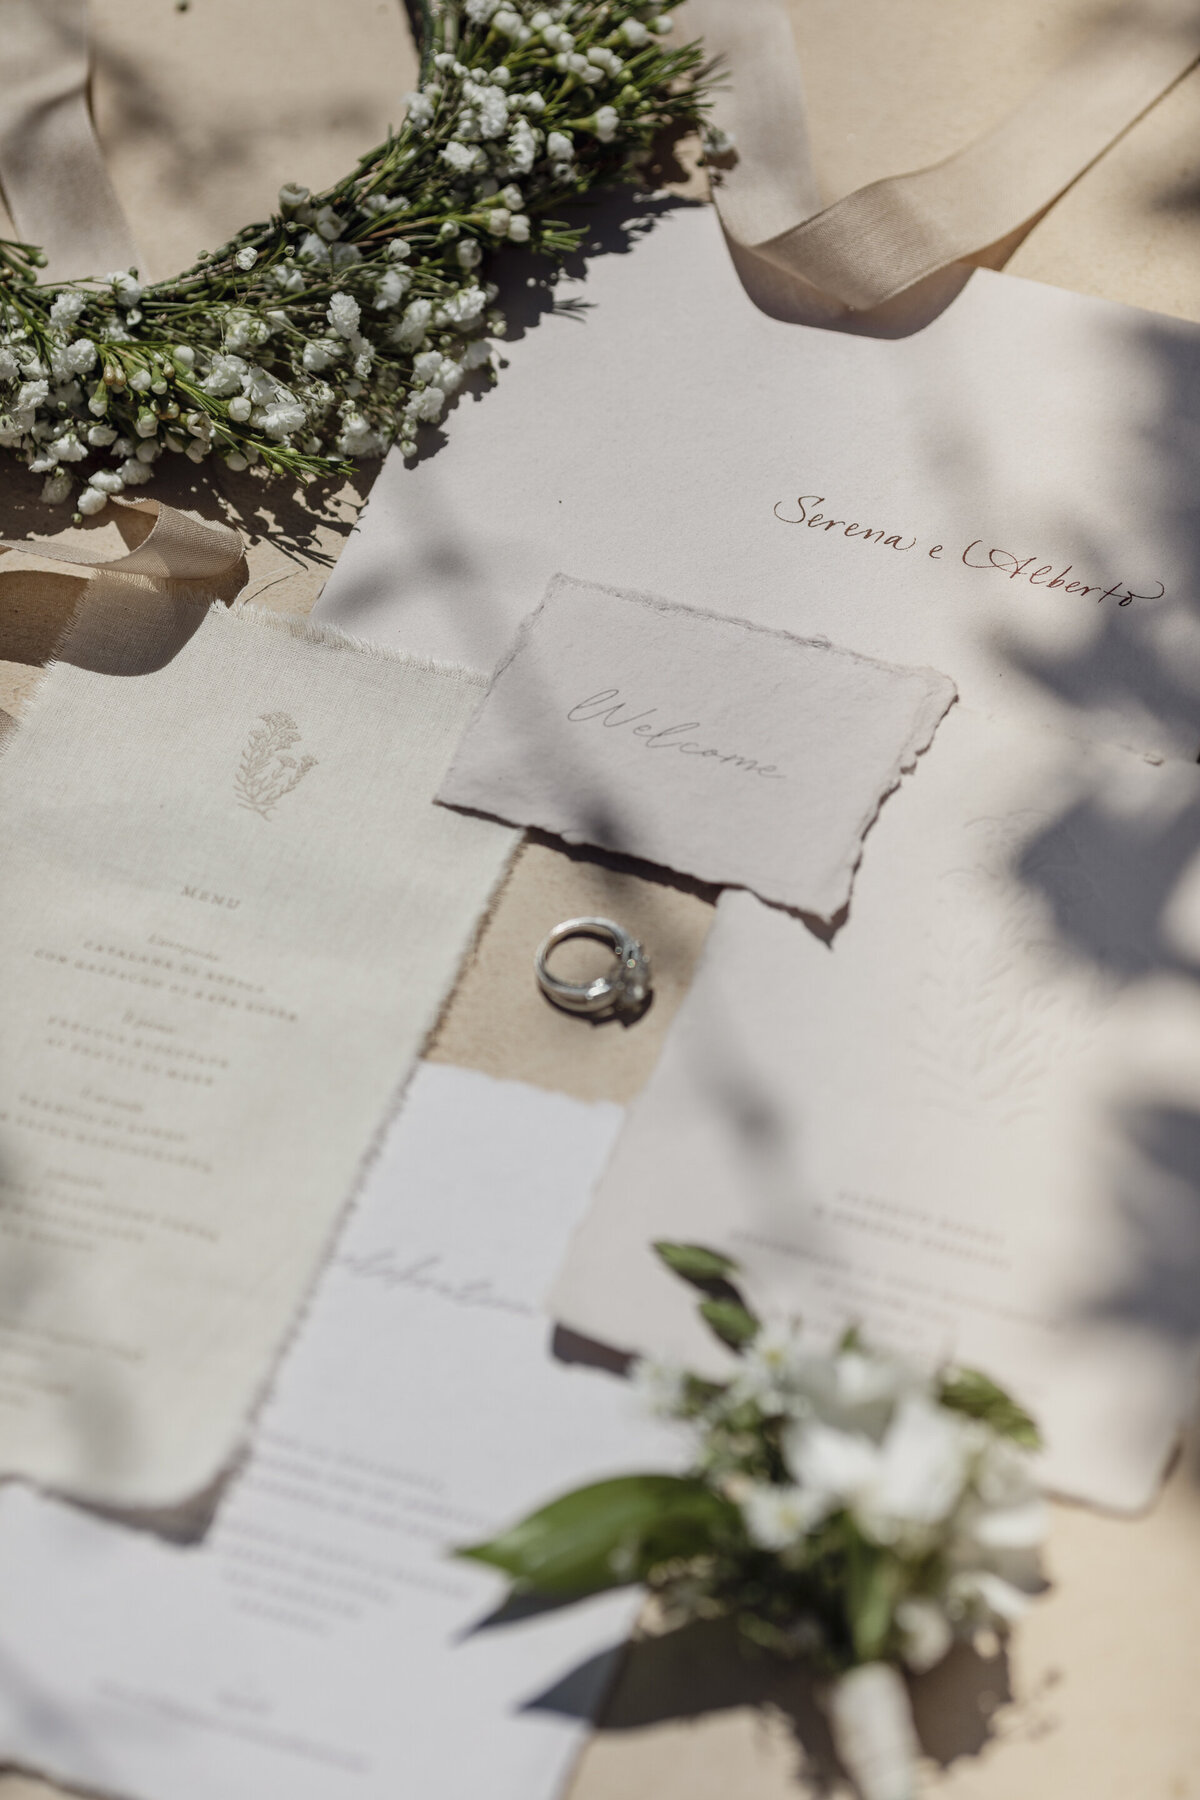 Wedding invitation for a wild destination wedding in sardinia